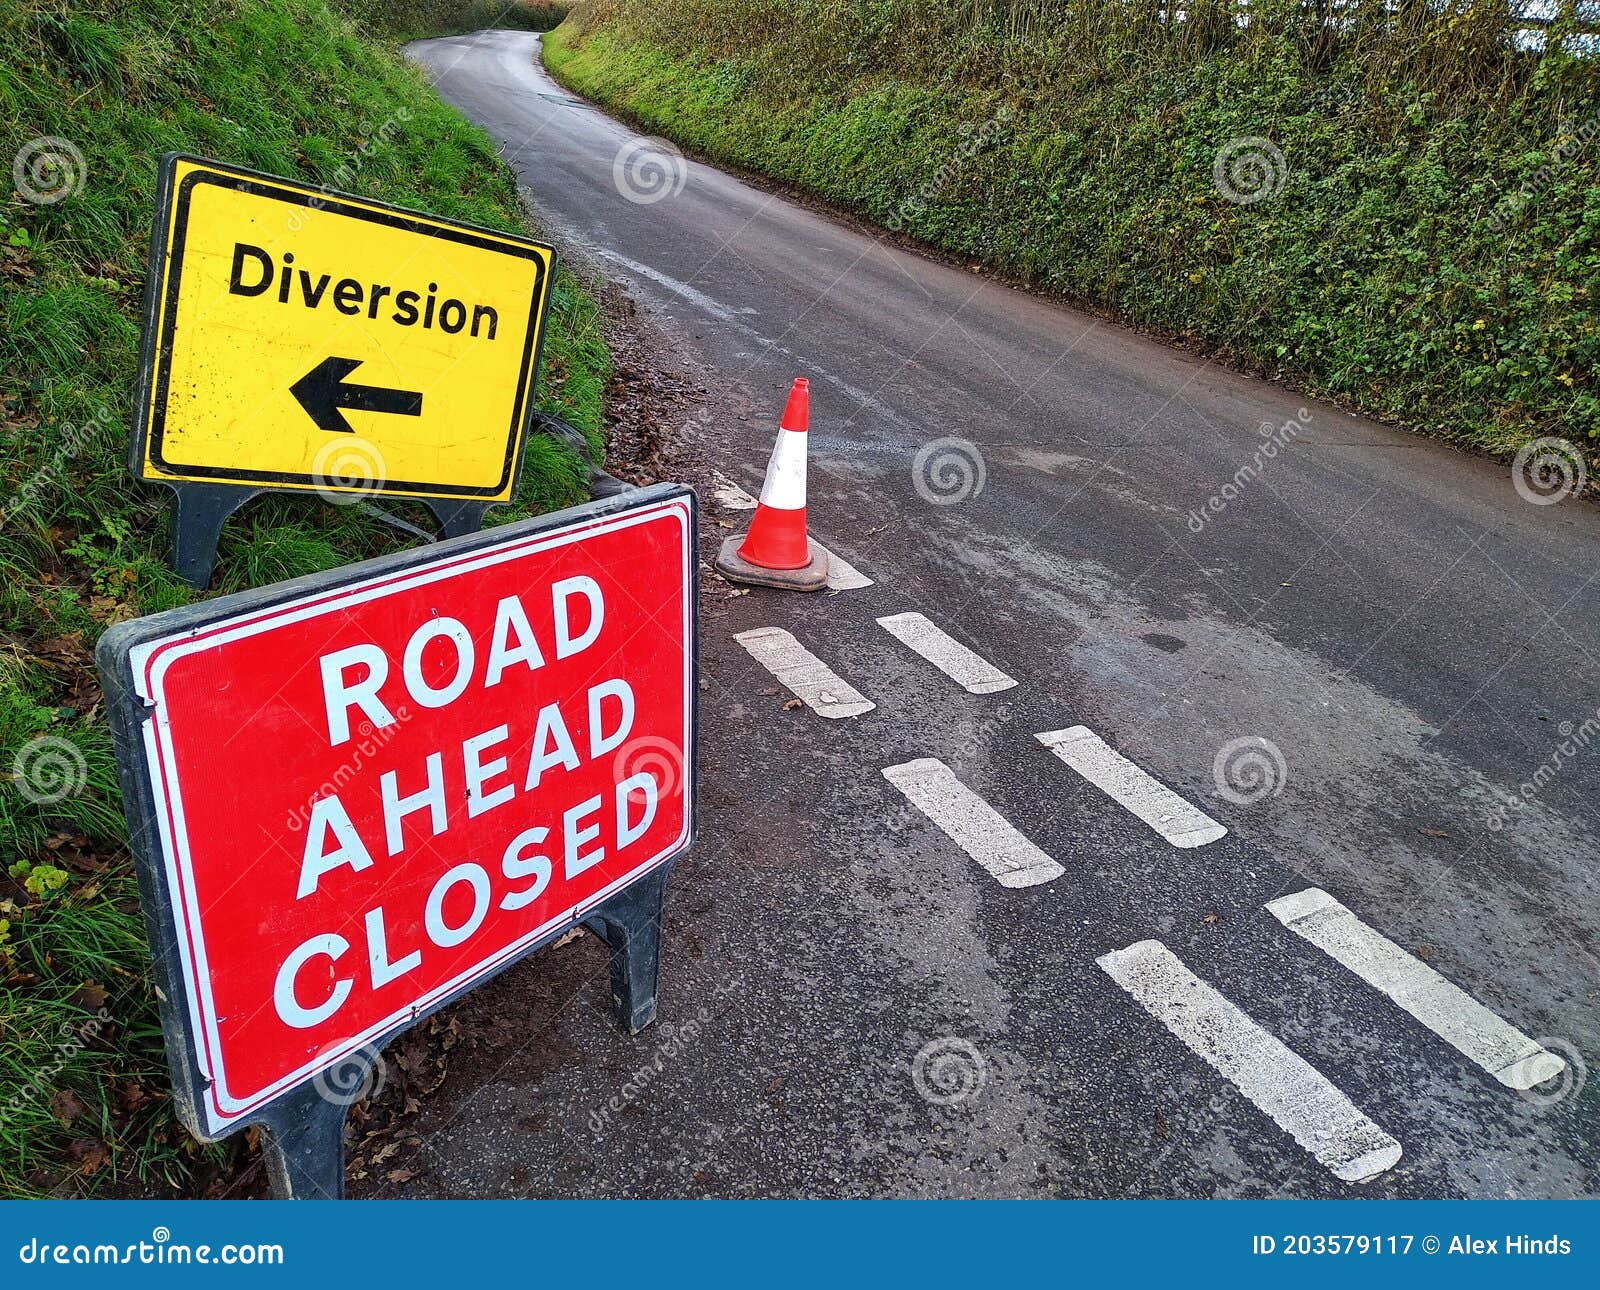 diversion road ahead closed